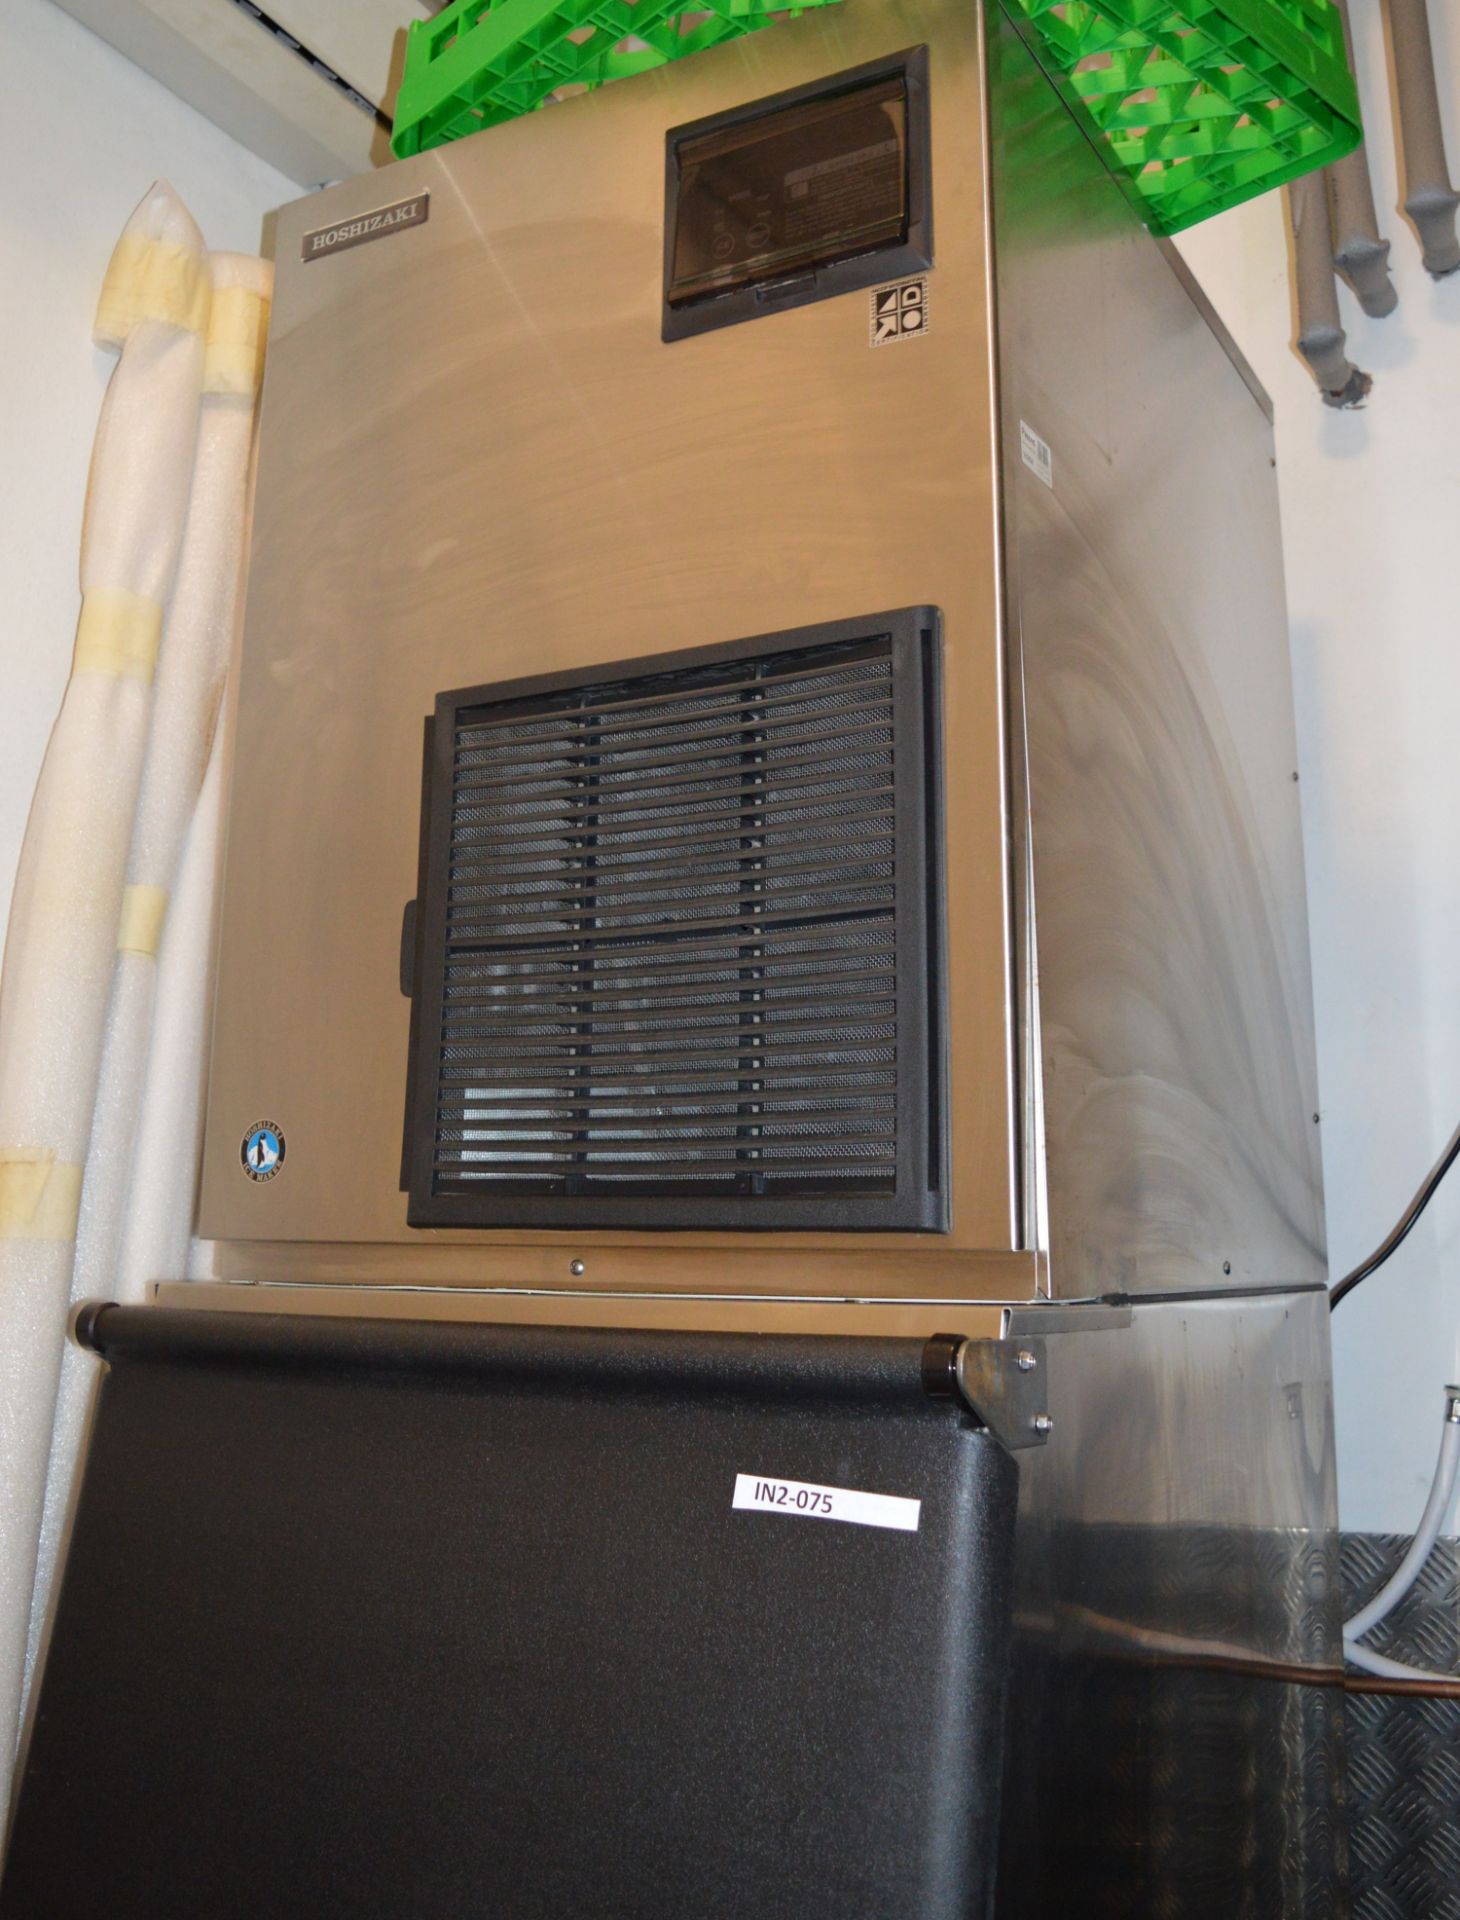 1 x Hoshizaki Air Cool Ice Maker Modular Storage Bin - Impressive 144kg Storage Capacity - - Image 7 of 8